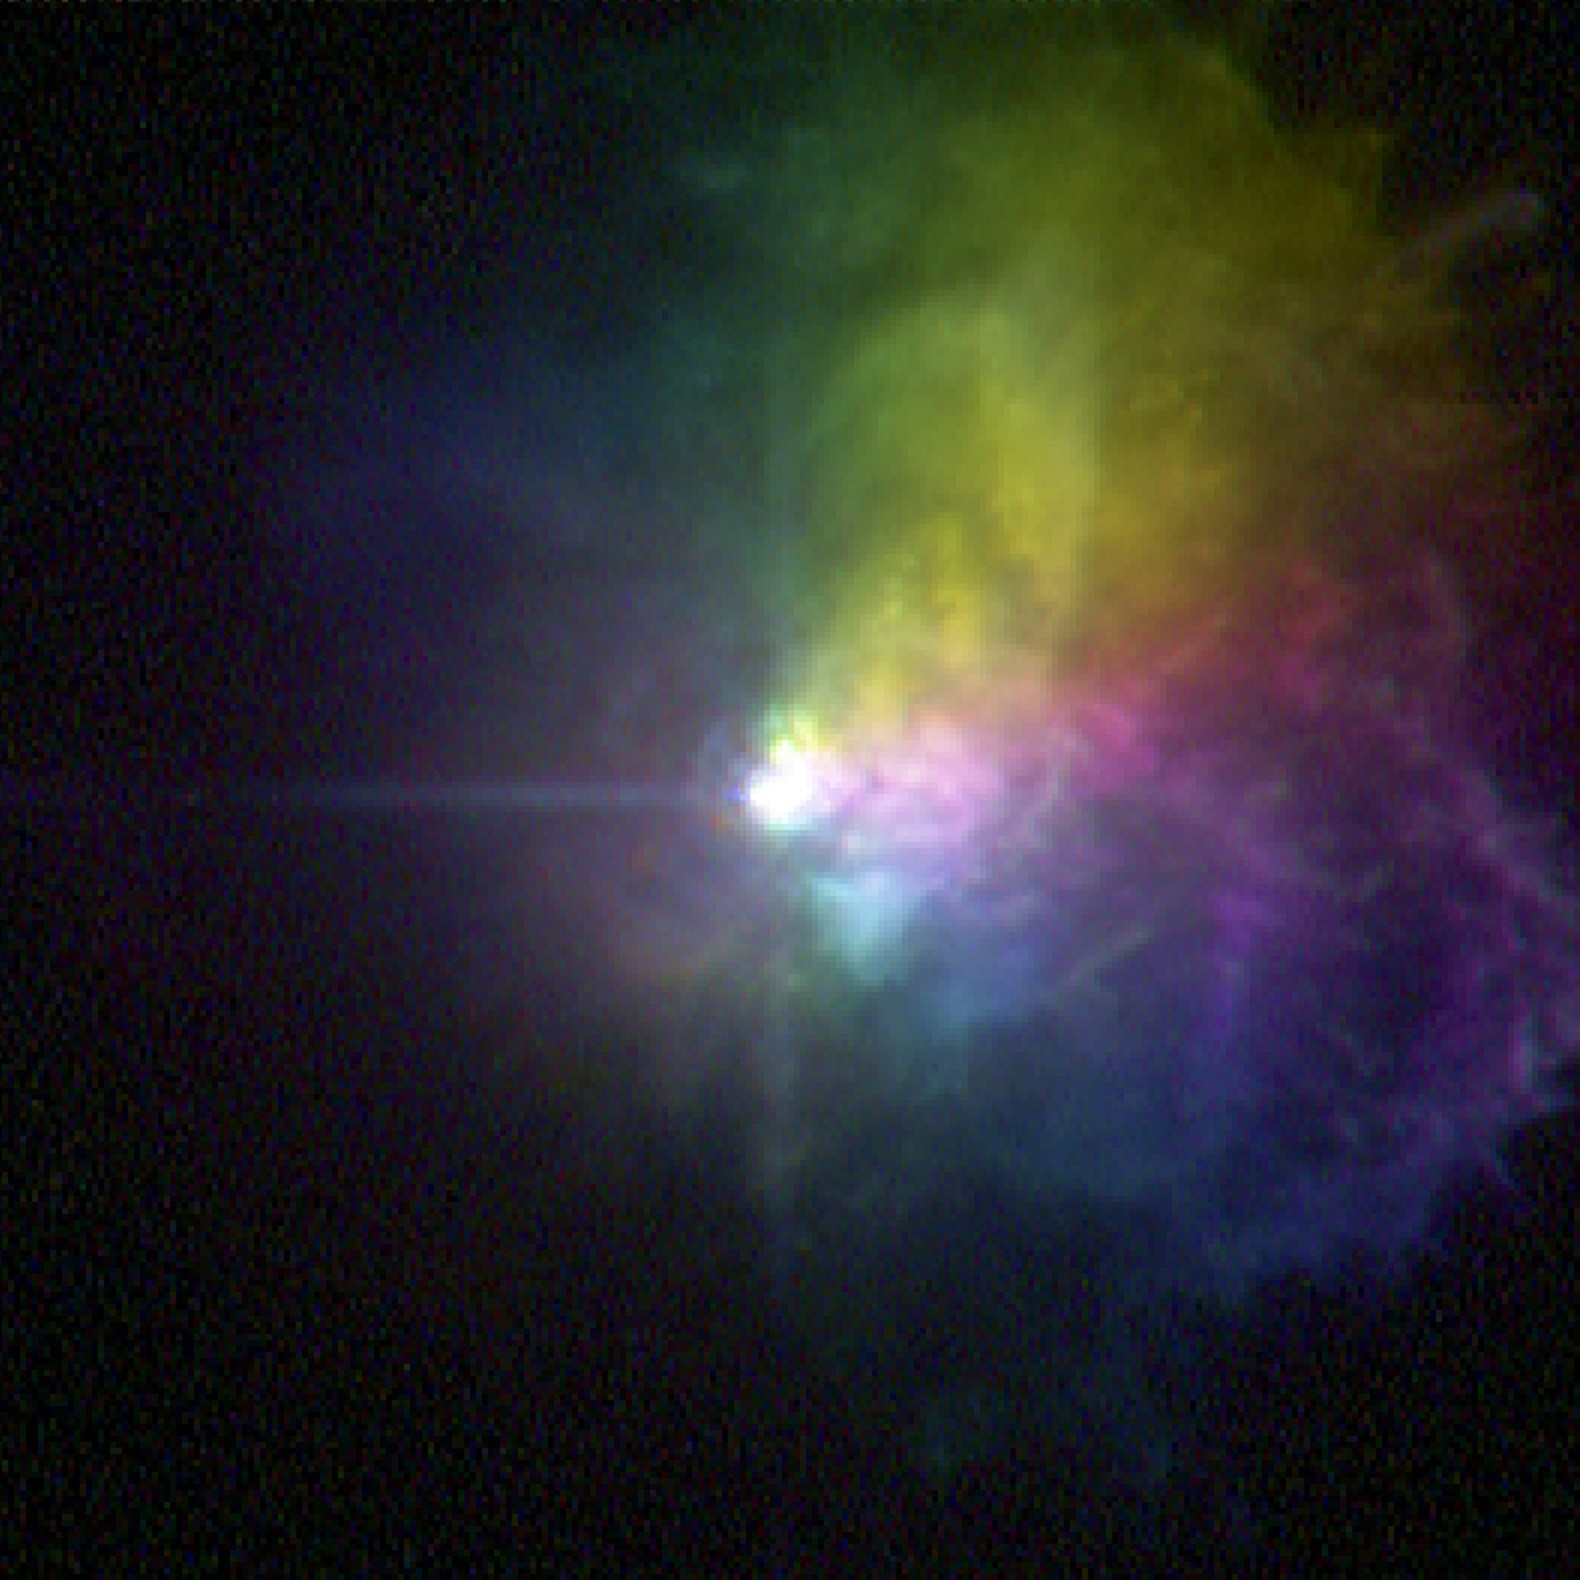 VY Canis Majoris - VY CMa - Hubble Space Telescope